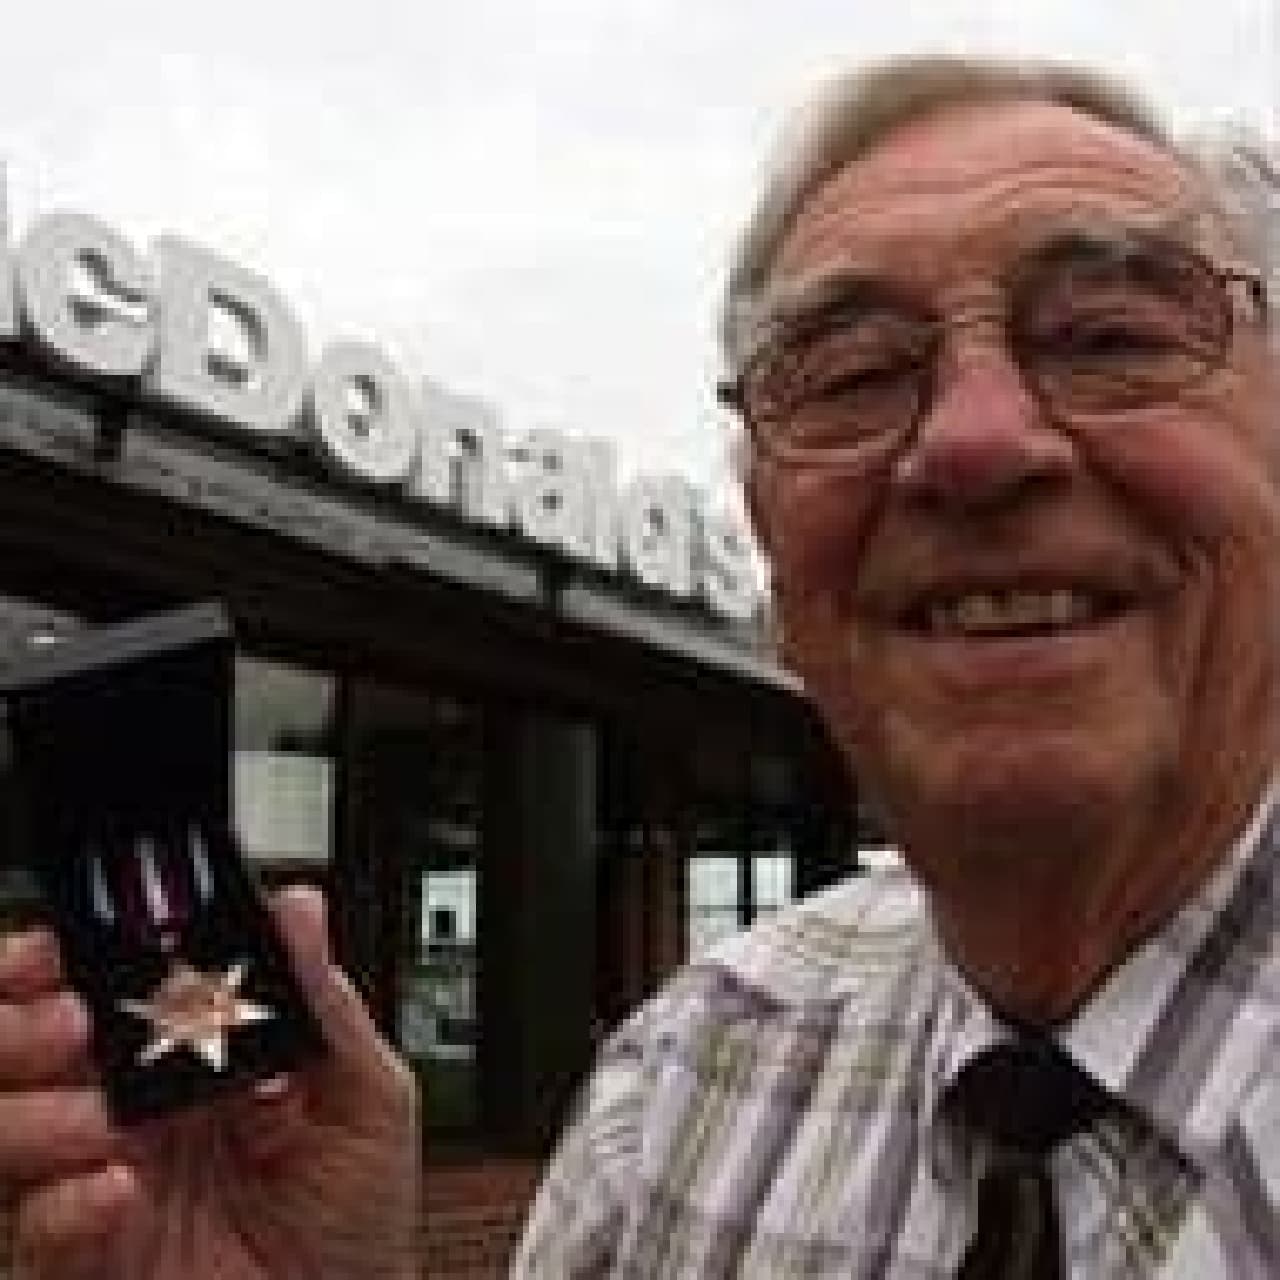 88-year-old McDonald's staff Bill Dudley